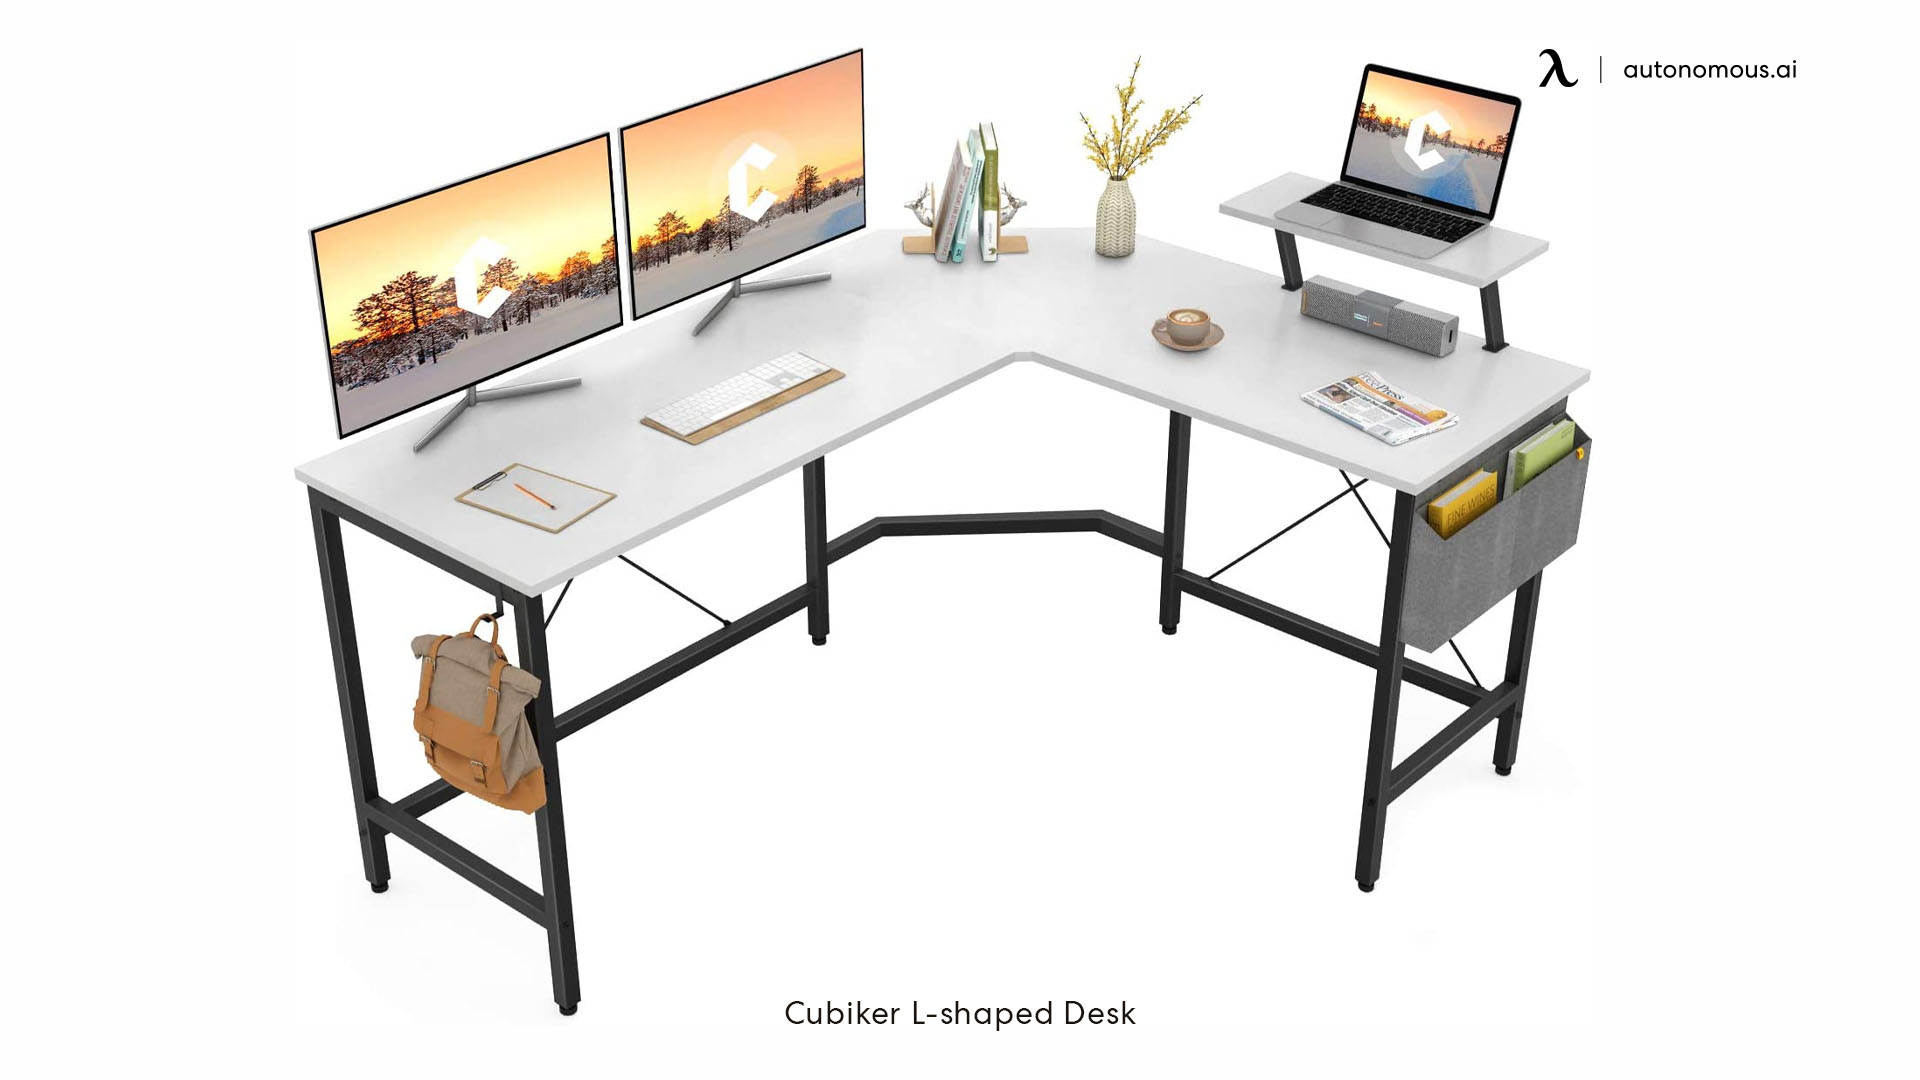 Cubiker L-shaped Desk